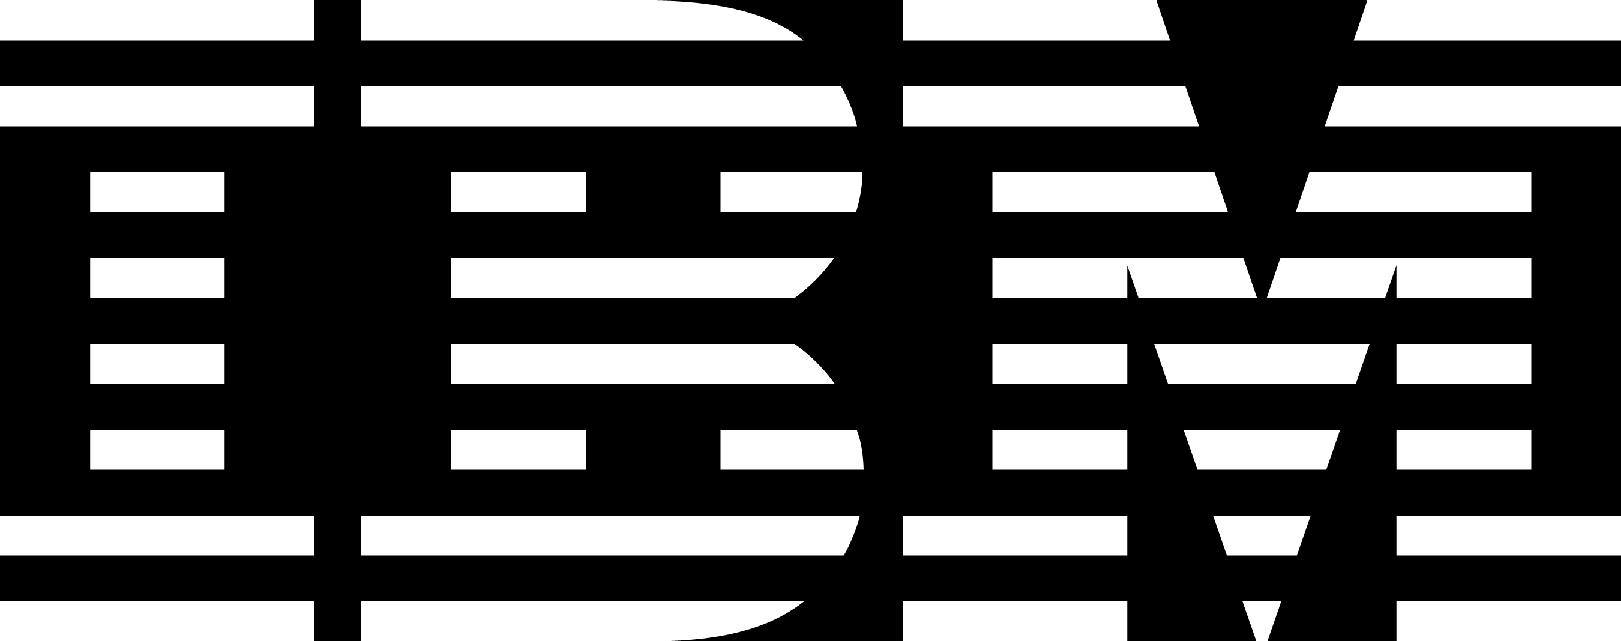 11 2011 IBM